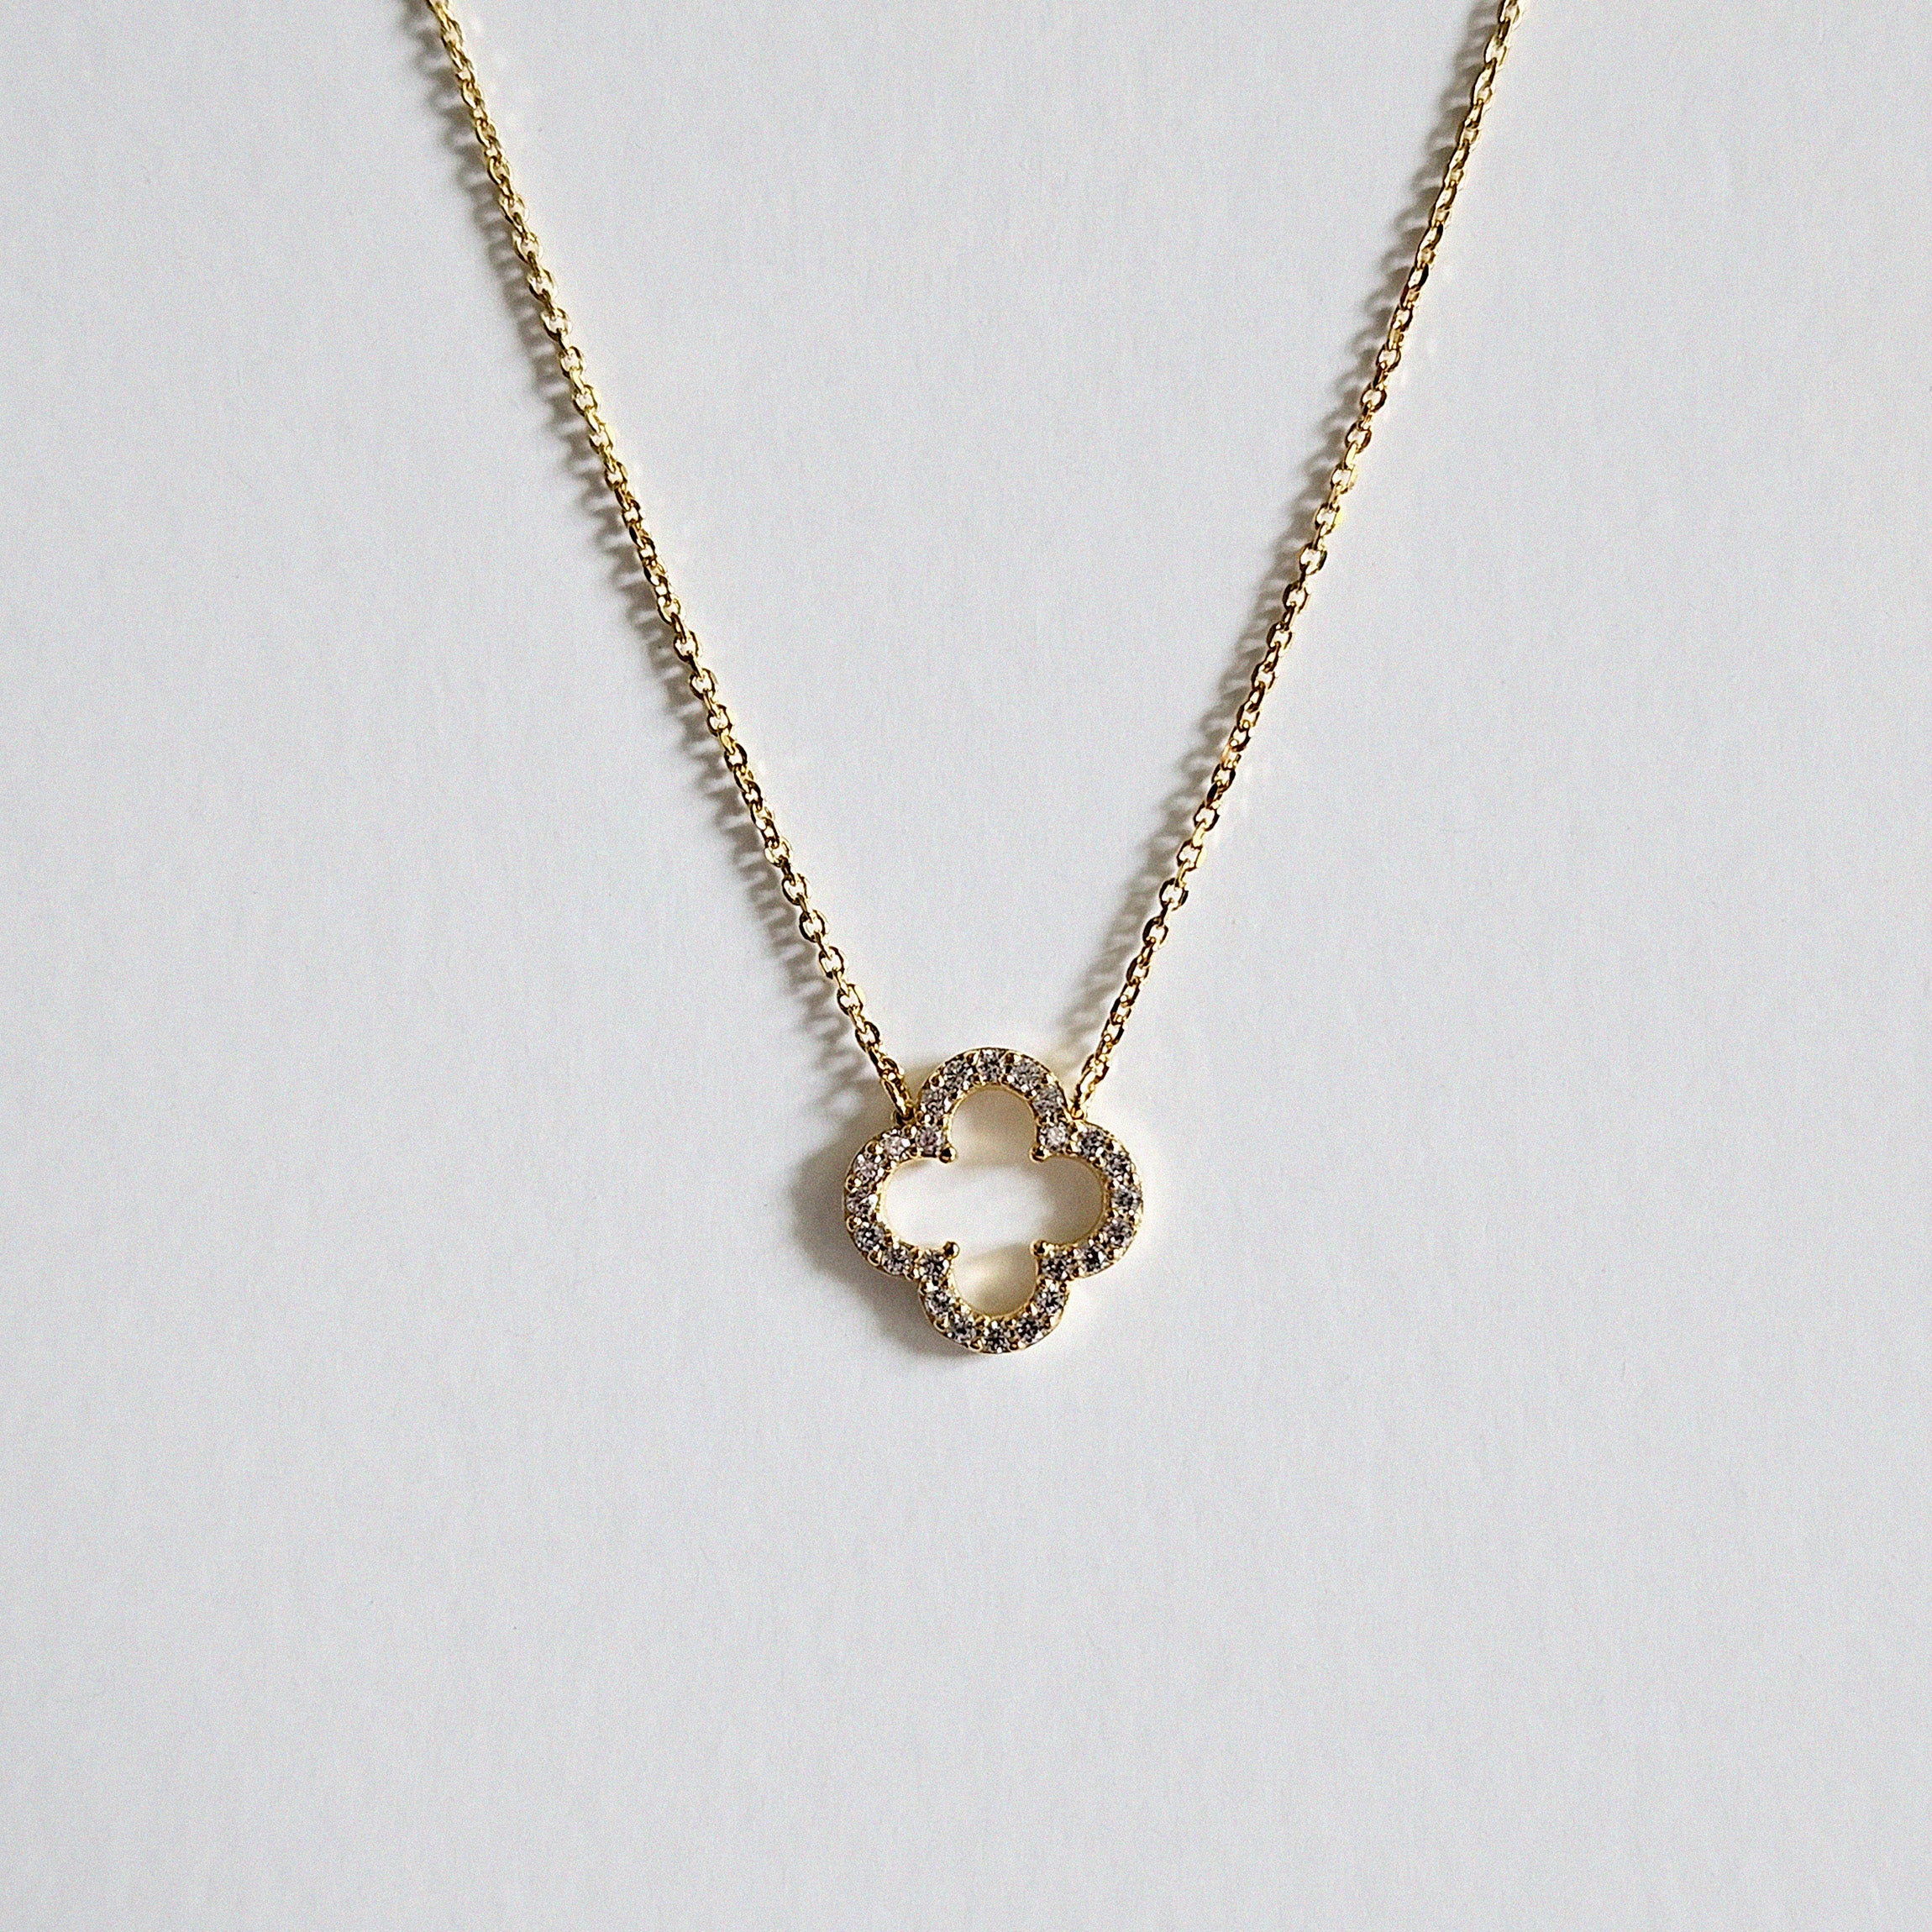 Crystal Clover Necklace 10mm